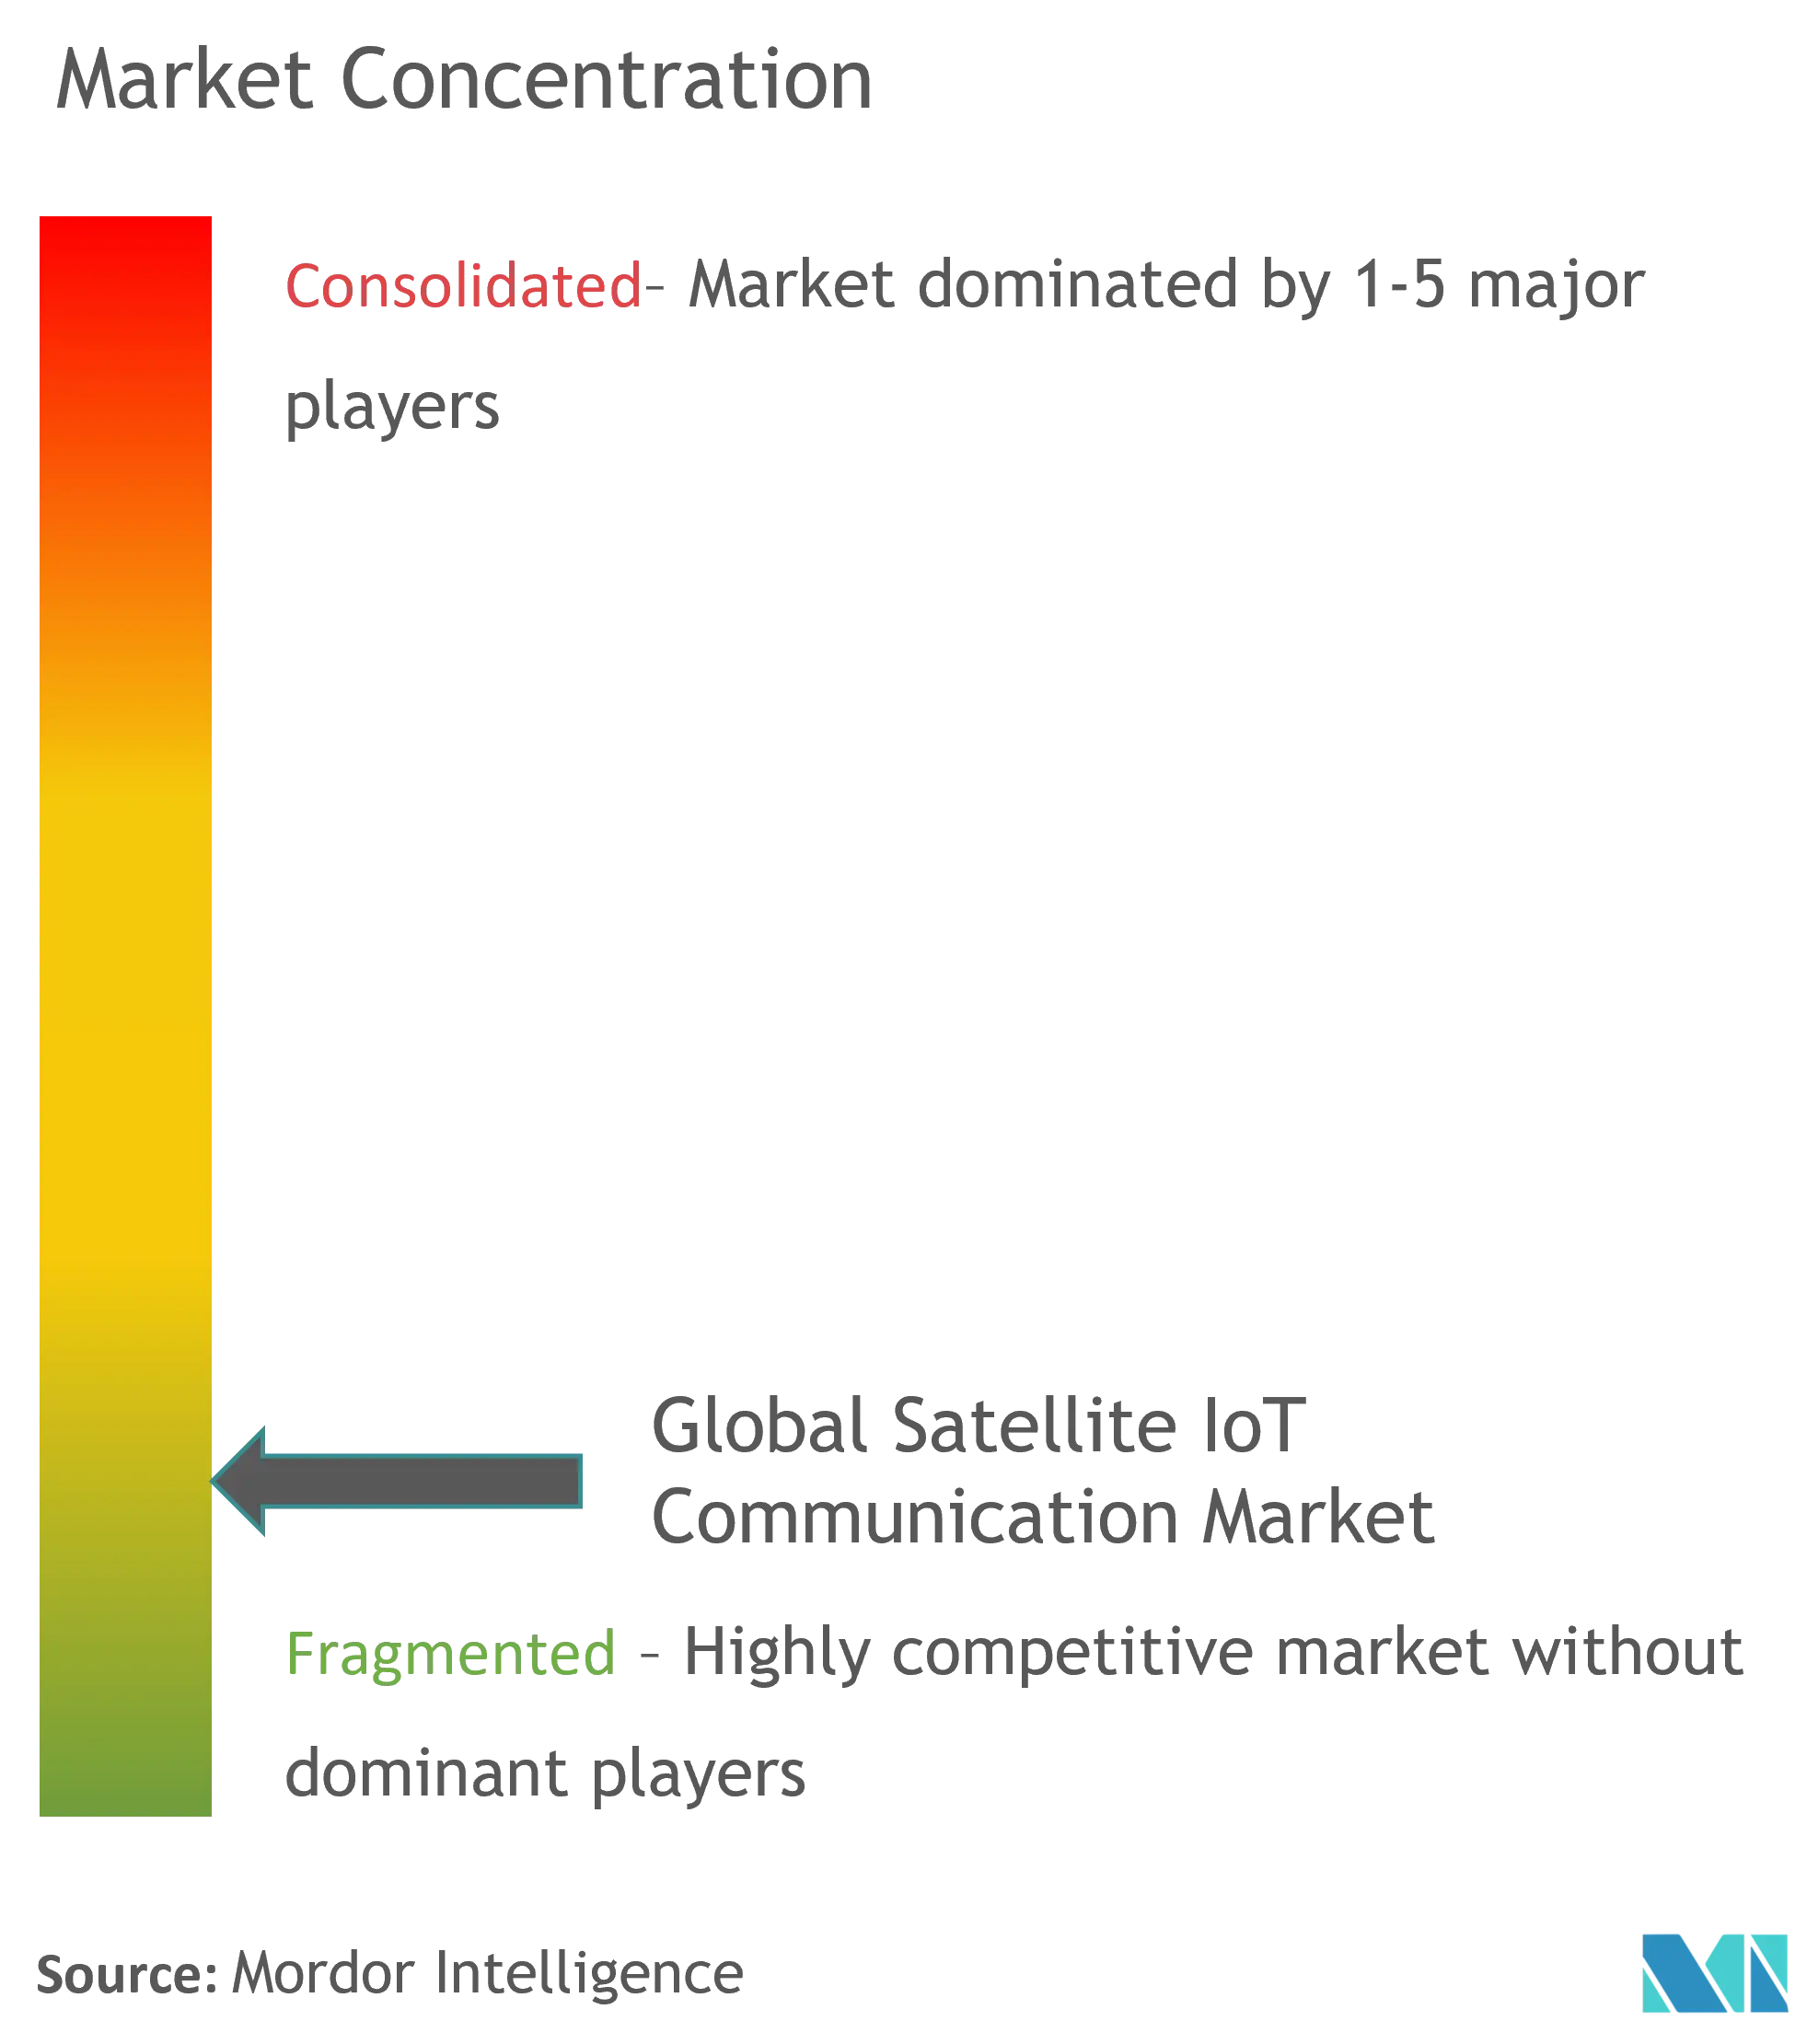 Satellite IoT Communication Market Concentration